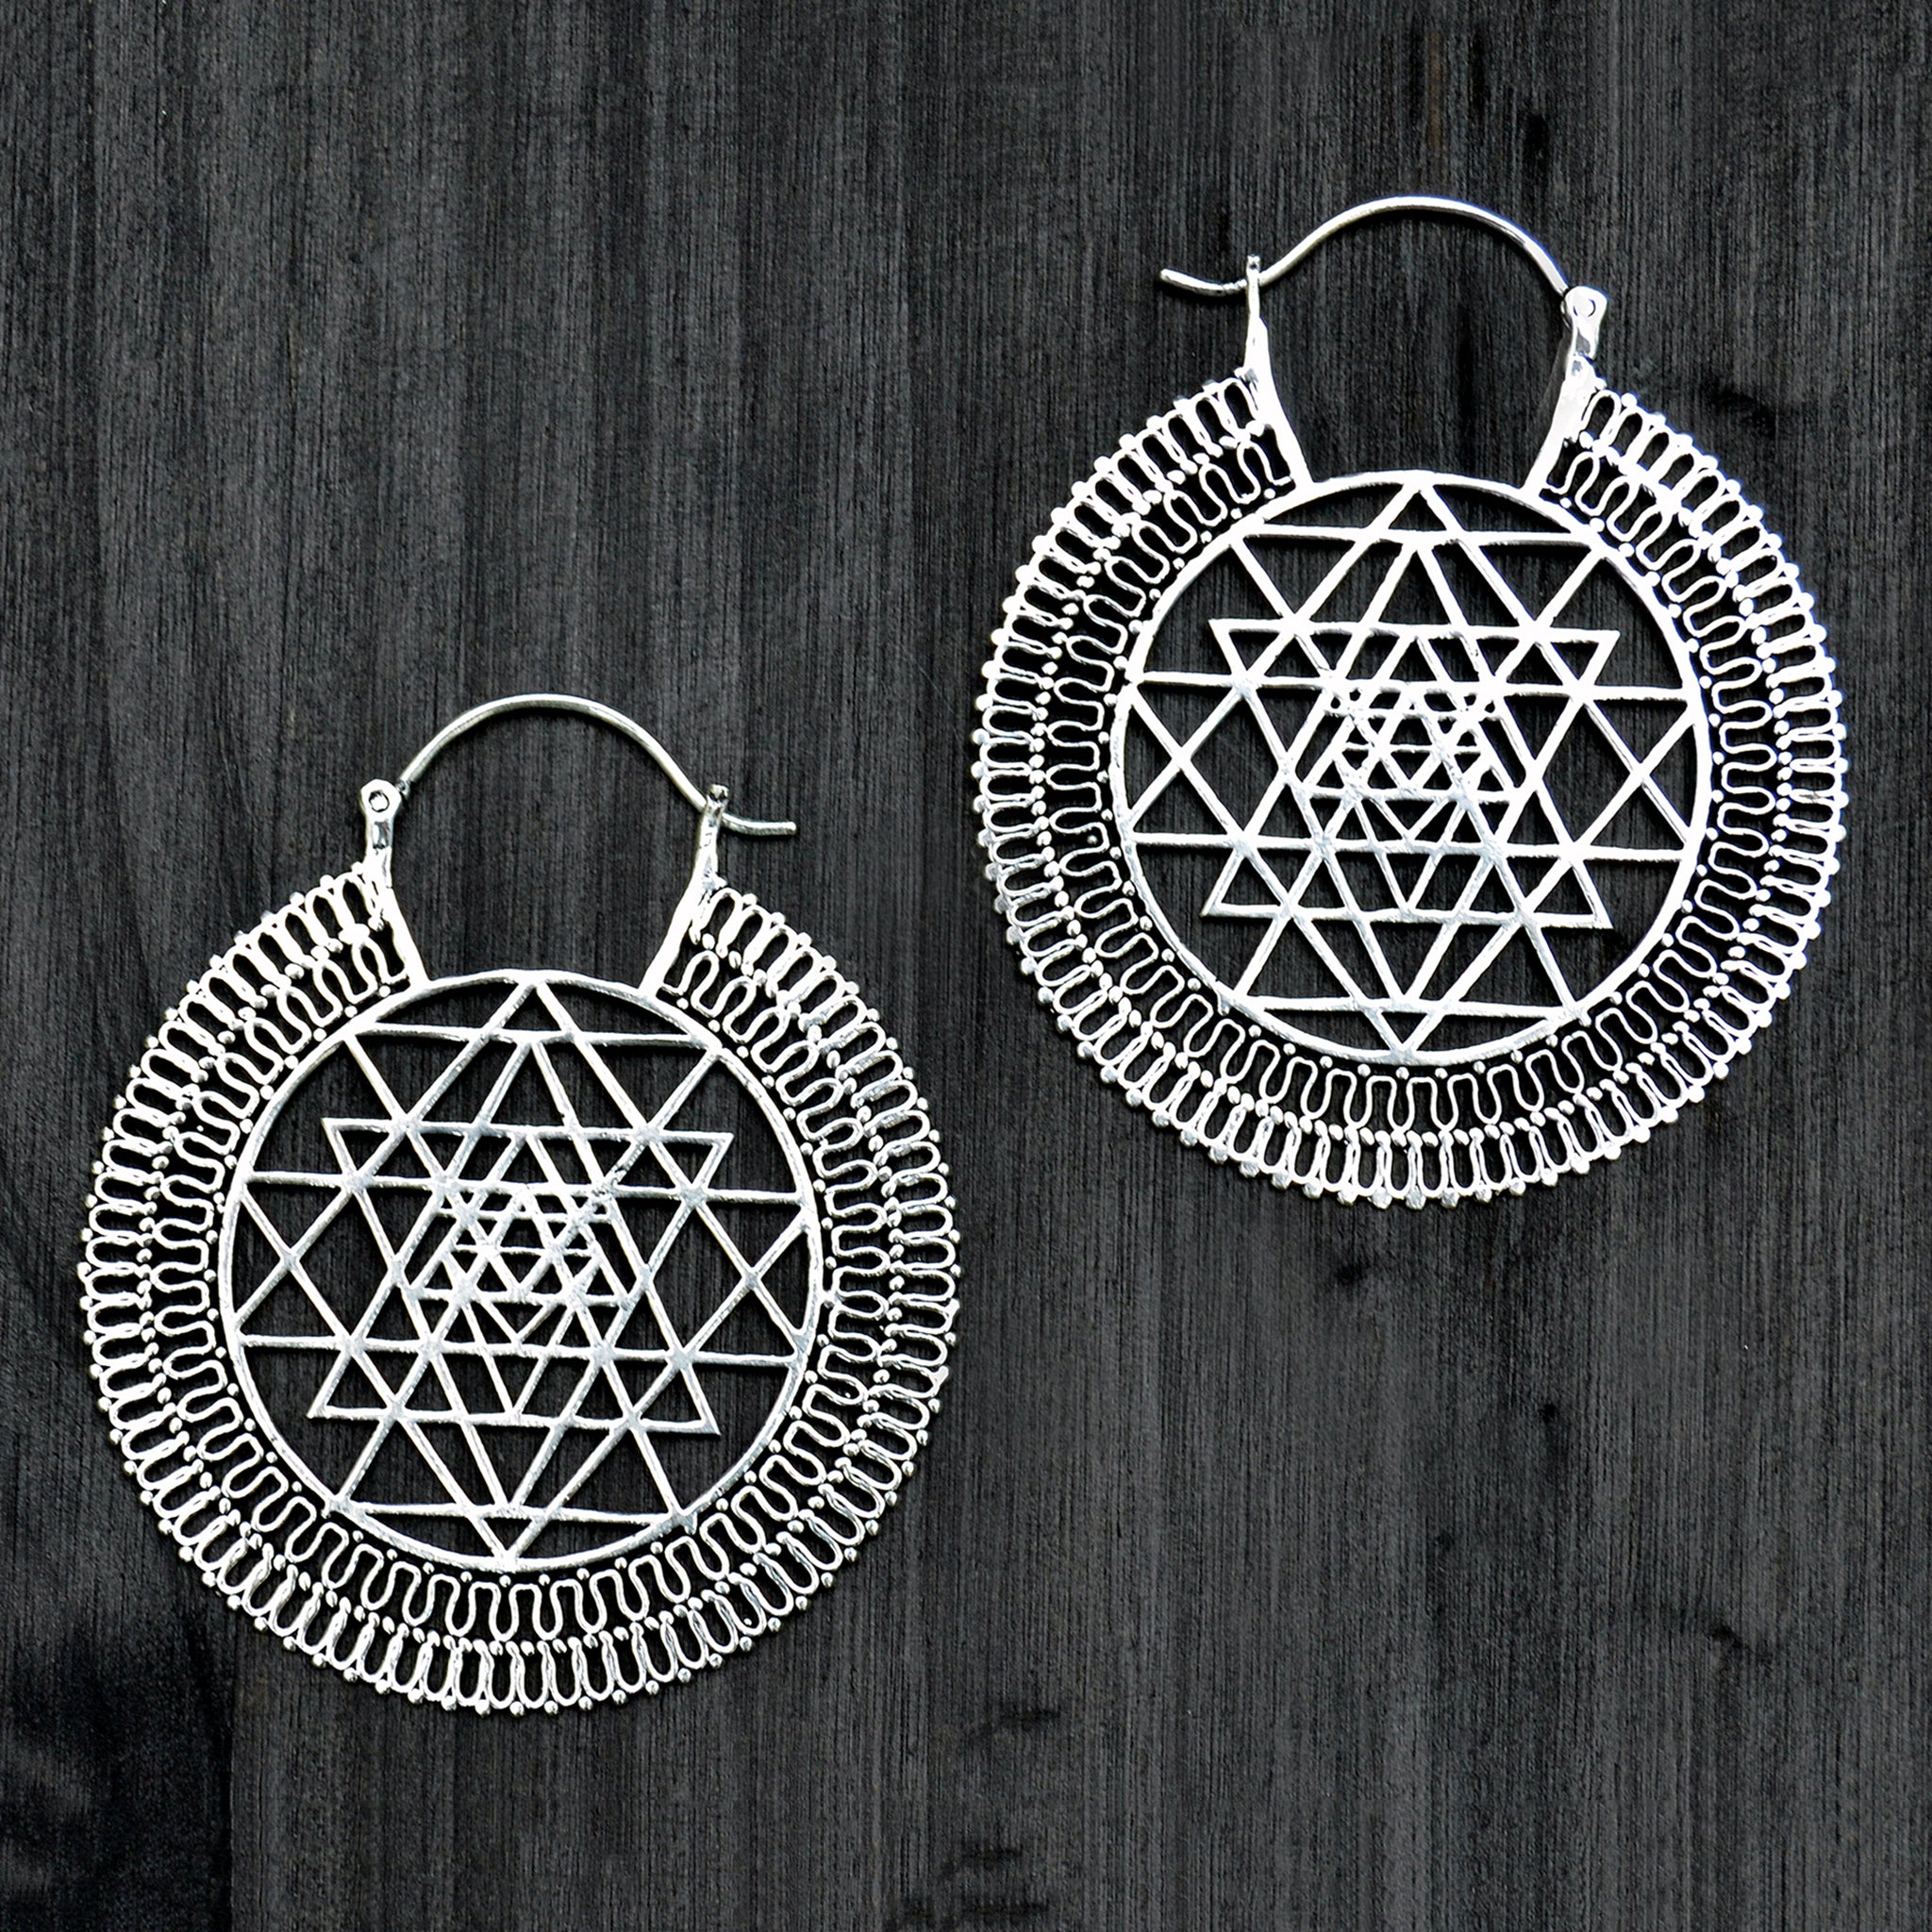 Sri yantra hoop earrings